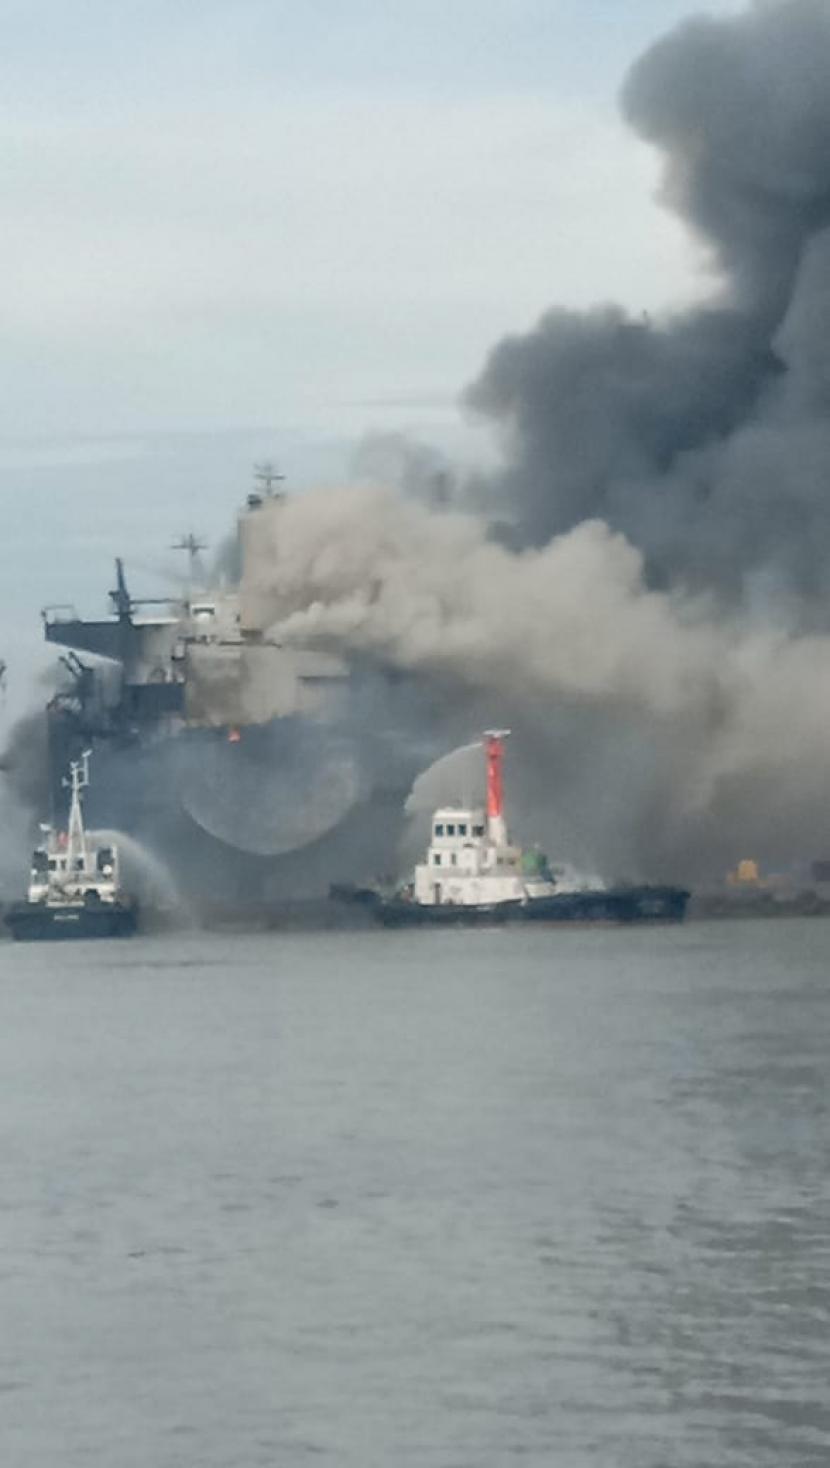 Kapal MT. JAG LEELA yang sedang melakukan perawatan atau docking di galangan kapal milik PT. Waruna Nusa Sentana Shipyard Belawan - Medan, terbakar. Proses evakuasi masih dilakukan. 